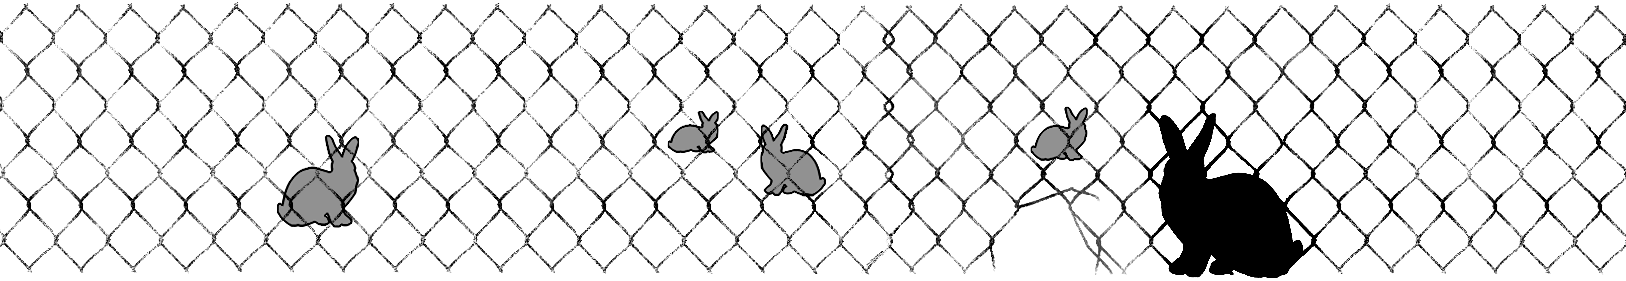 rabbitprooffence_web_11.gif